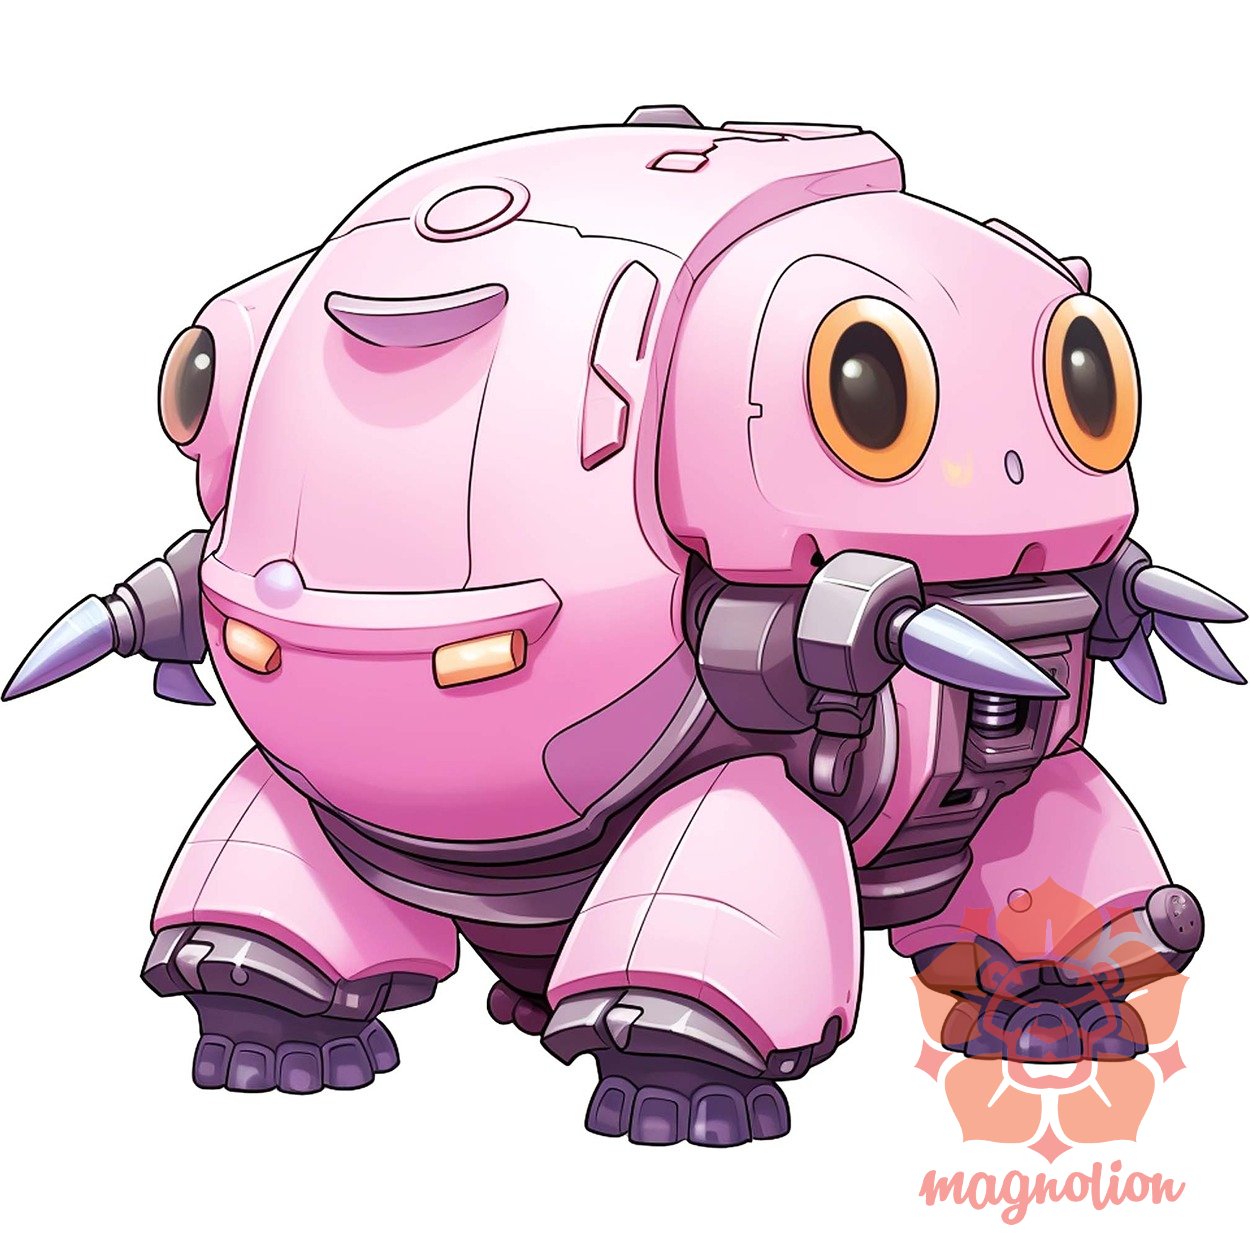 Pink baby robot v4